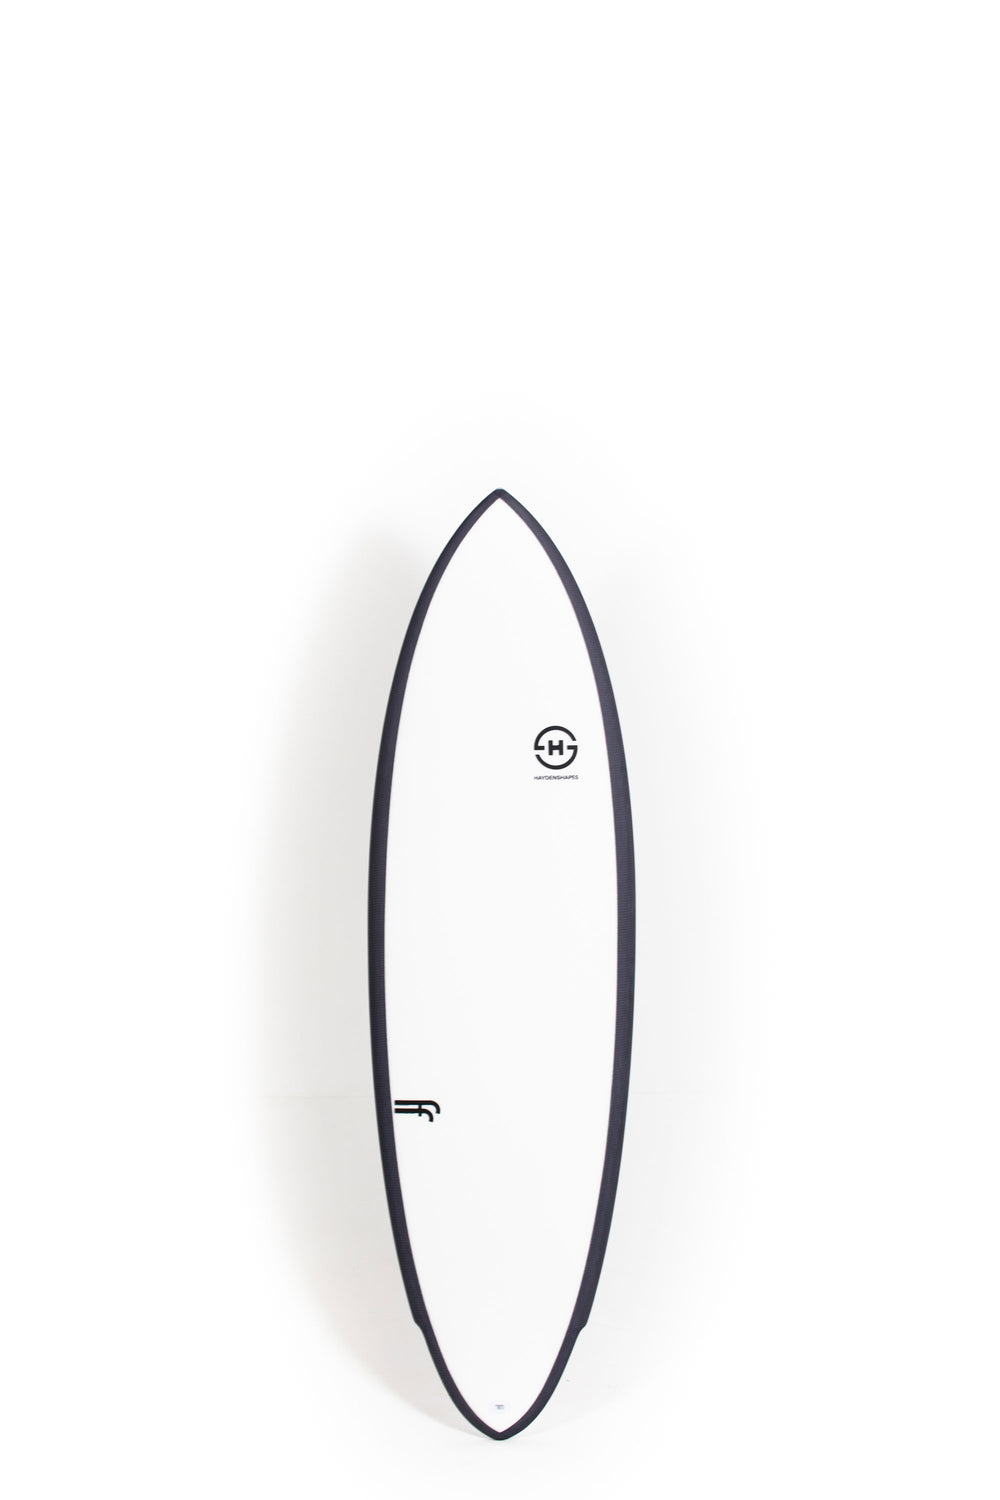 Pukas Surf Shop - Haydenshapes Surfboard - HYPTO KRYPTO TWIN PIN - 6'0